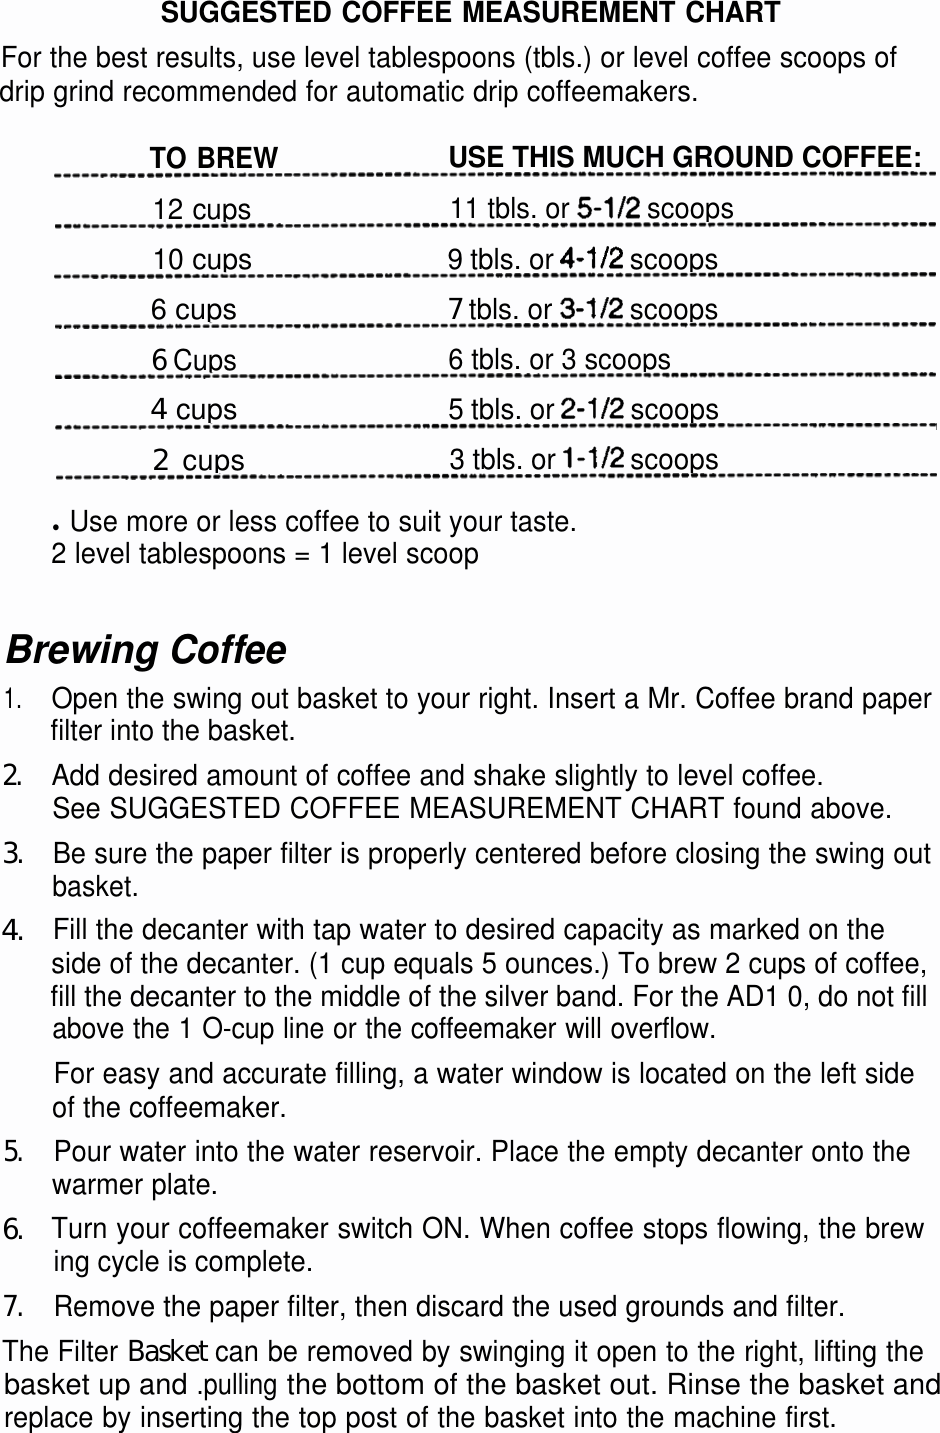 Coffee Measurement Chart